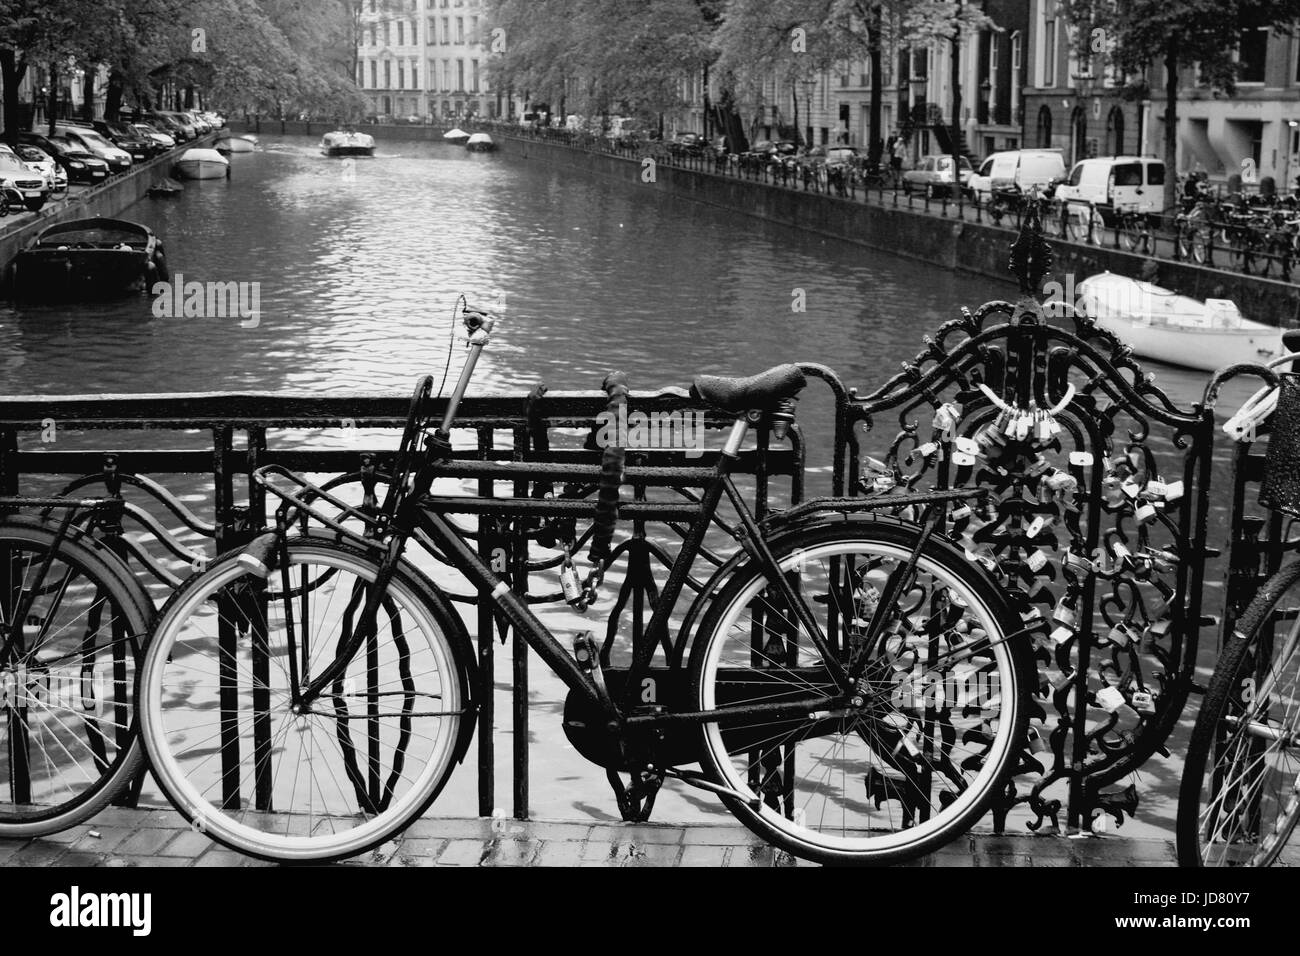 City of bikes in B/W - Amsterdam, Holland. Stock Photo